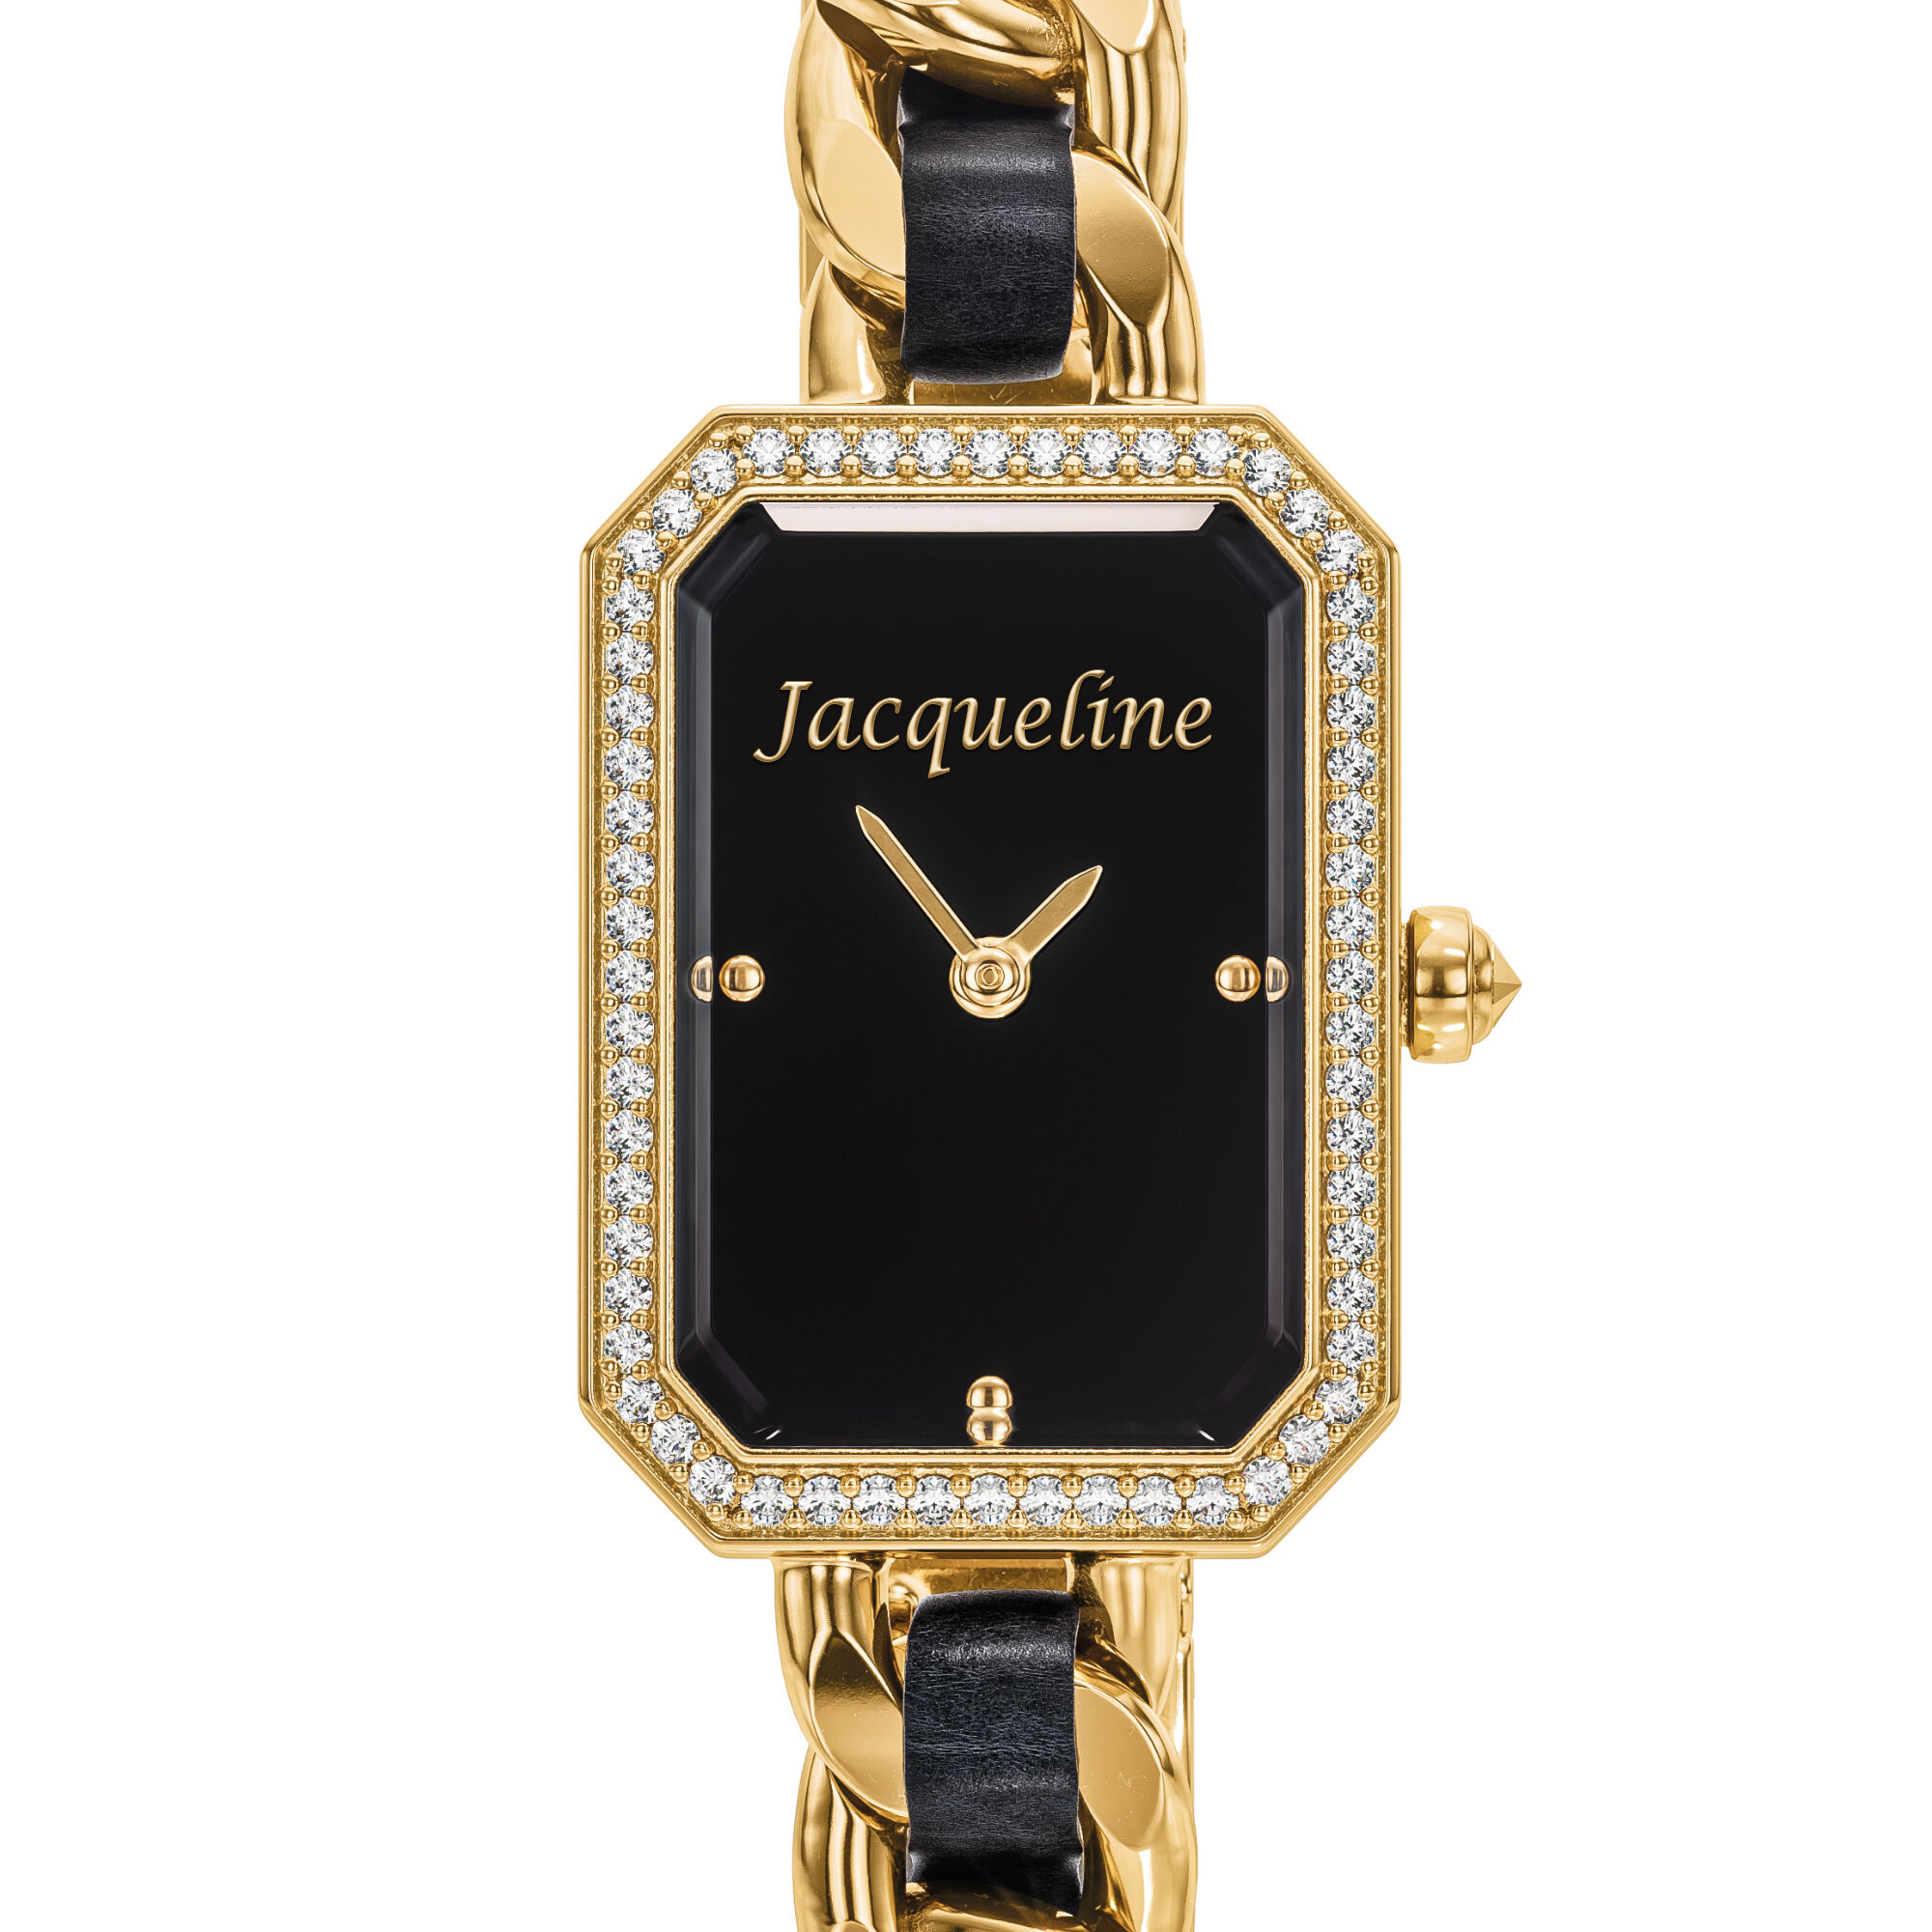 Personalized Black Gold Watch 10816 0011 b straight